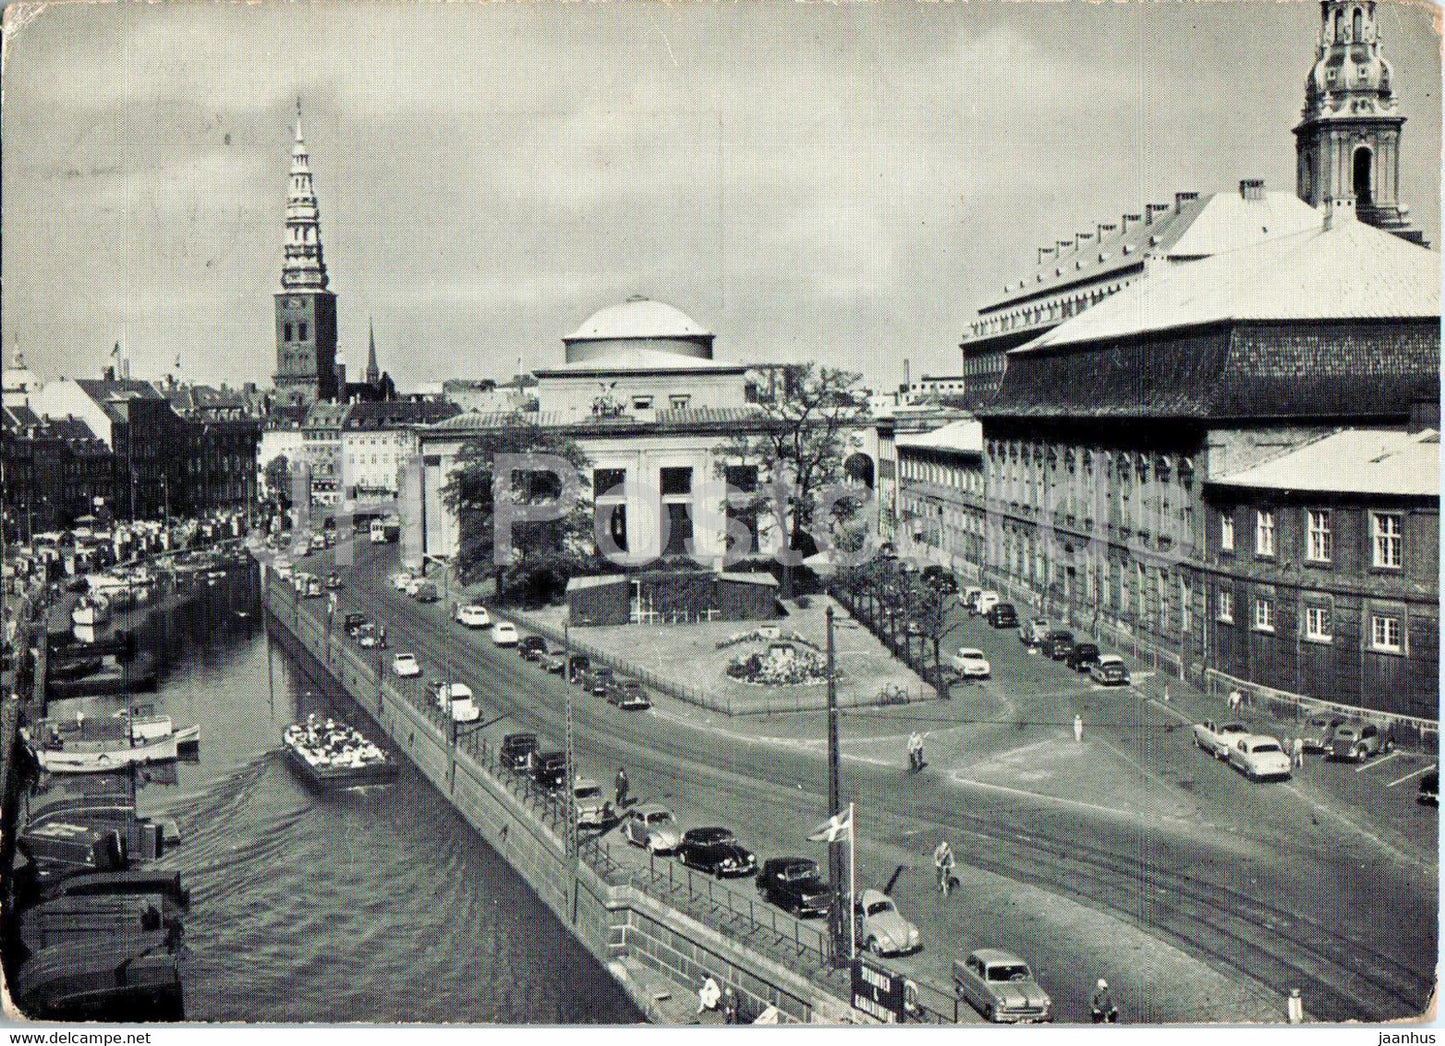 Copenhagen - Kopenhagen - The Old Strand with Fishmarket and Thorvaldsen Museum - 161 - 1961 - Denmark - used - JH Postcards